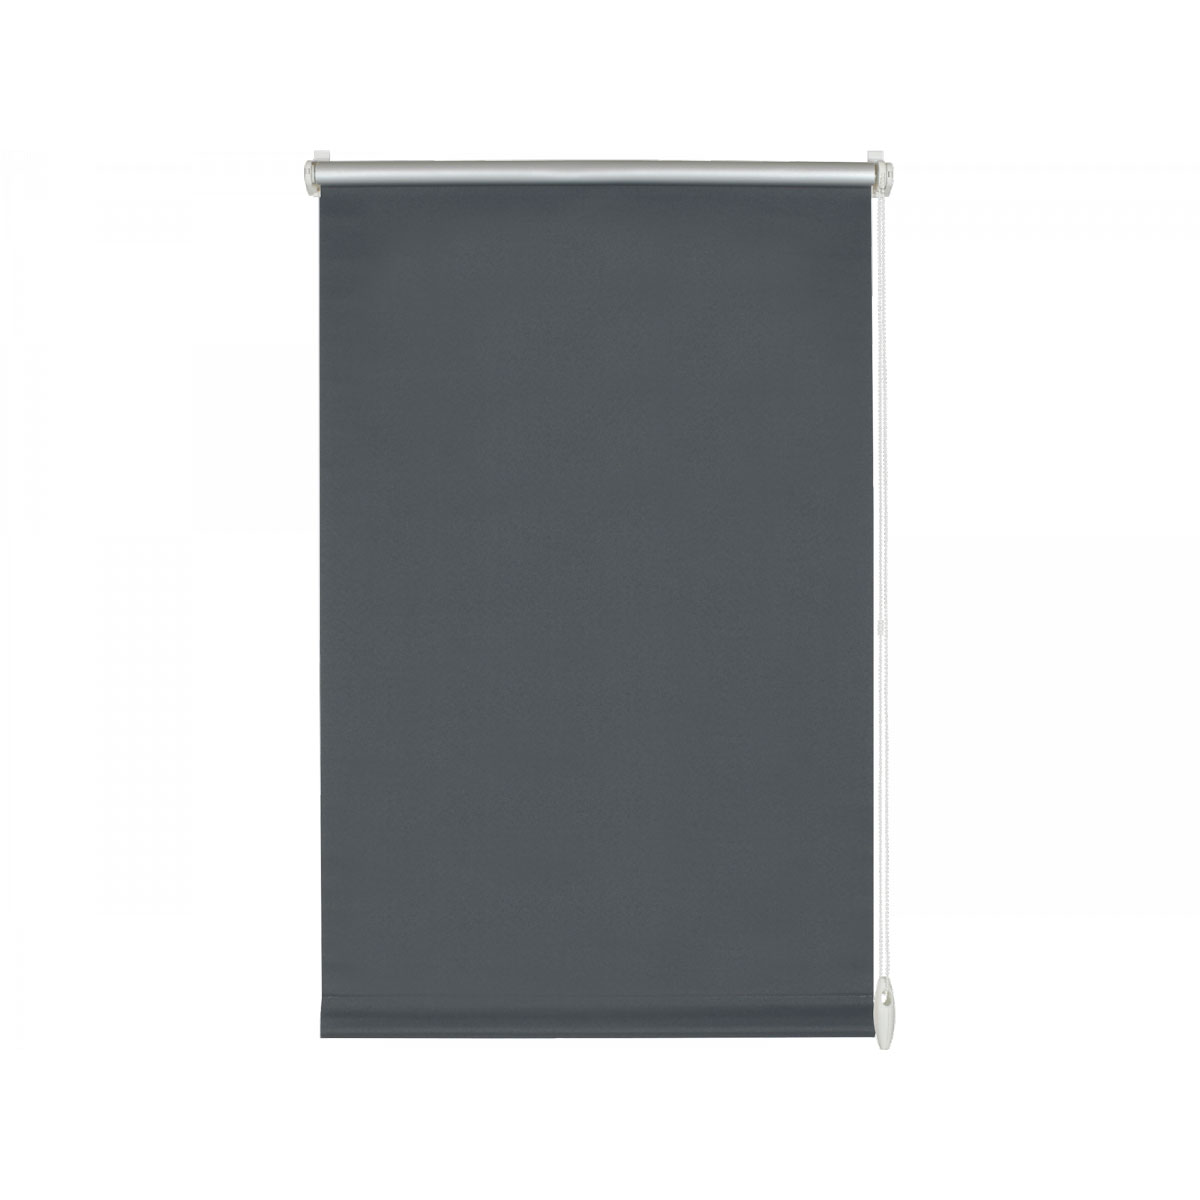 Gardinia Rollo Easyfix Uni Thermo energiesparend 45 x 150 cm schiefer |  45x150 | 297546 | Fensterfolien